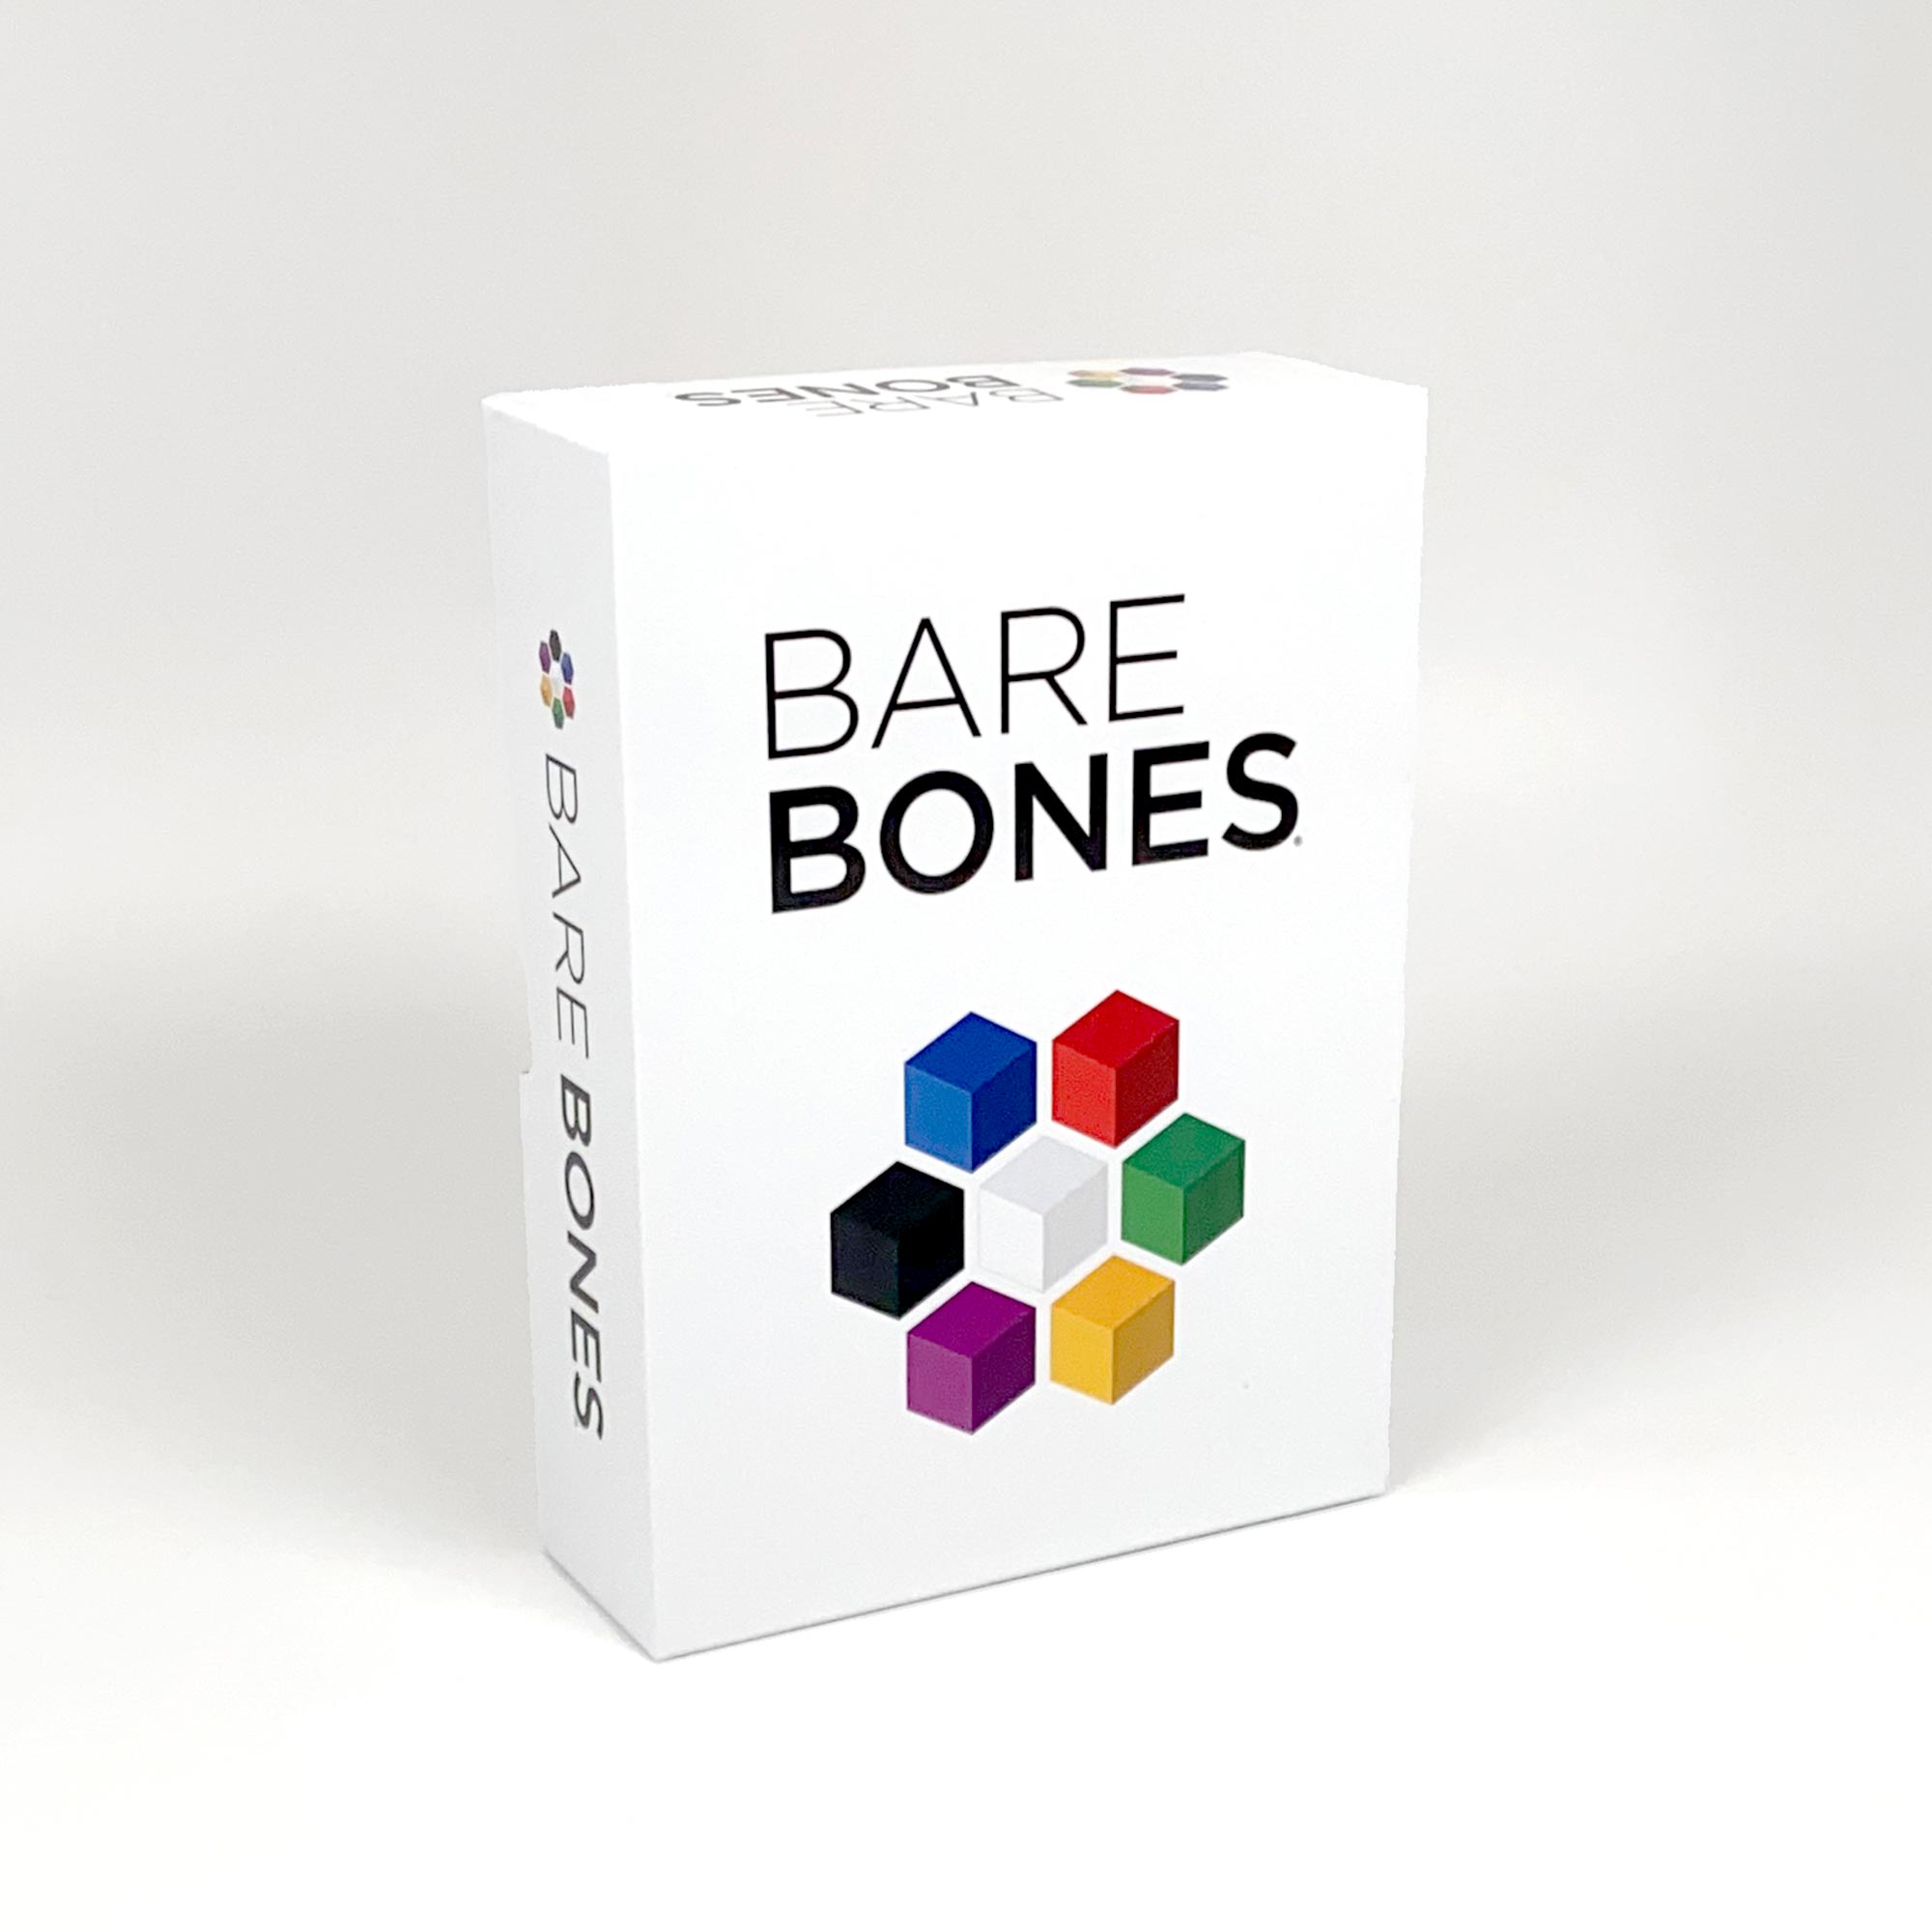 Bare Bones – Bare Bones by West Coast Bias Games